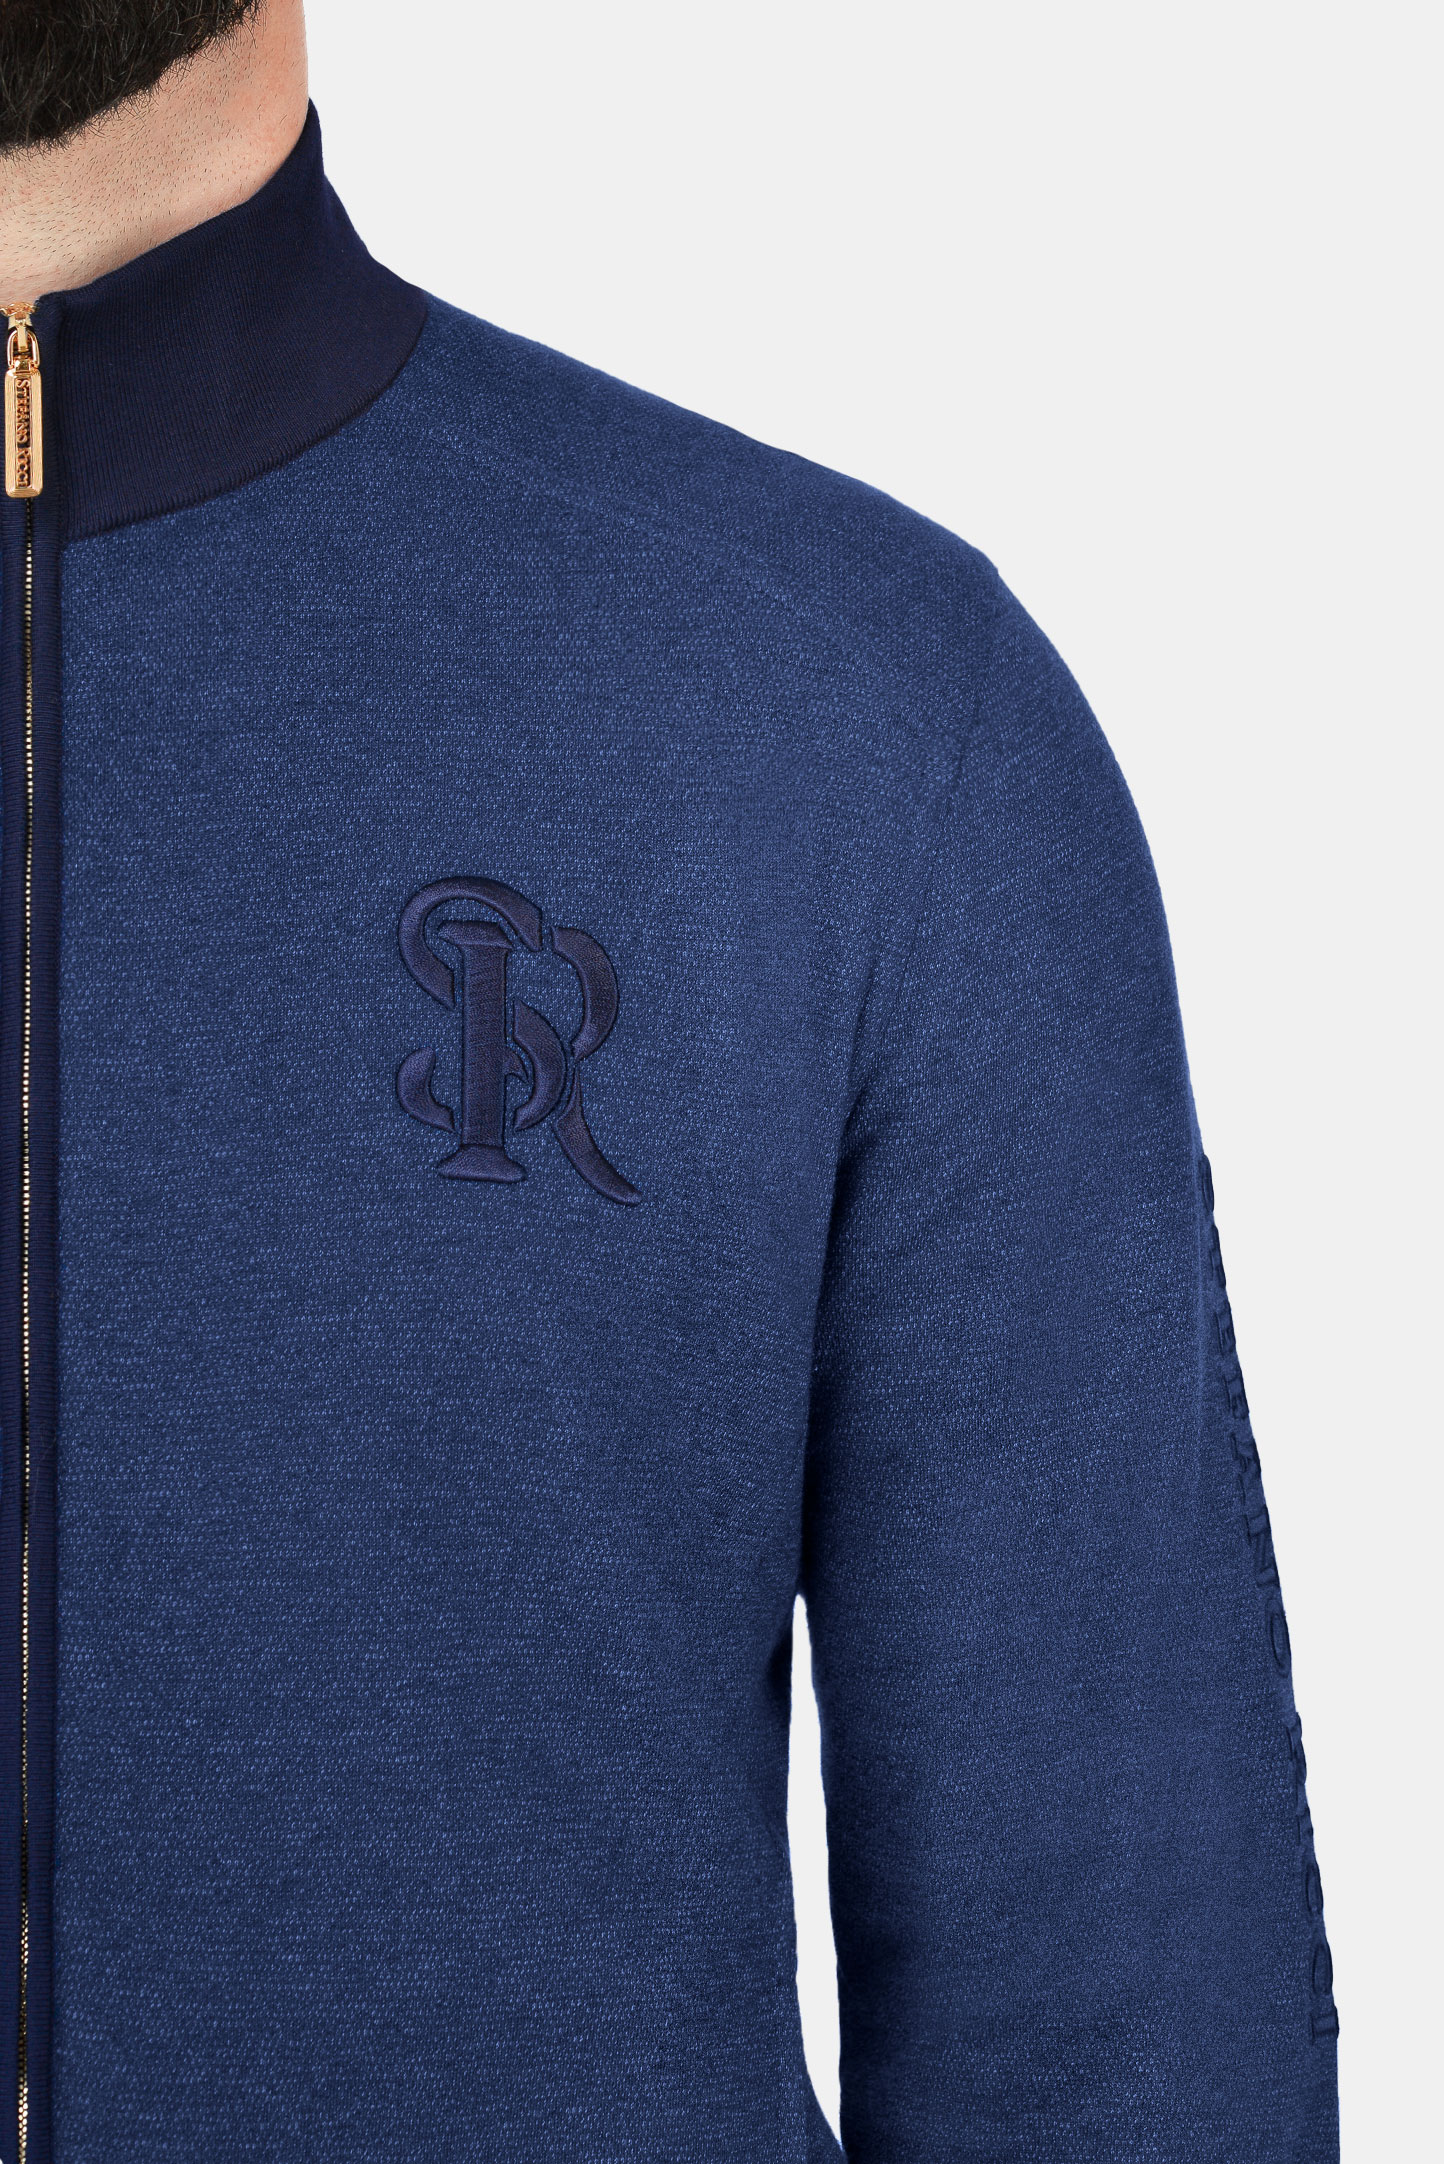 Куртка спорт STEFANO RICCI K919029R31 T21210, цвет: Синий, Мужской